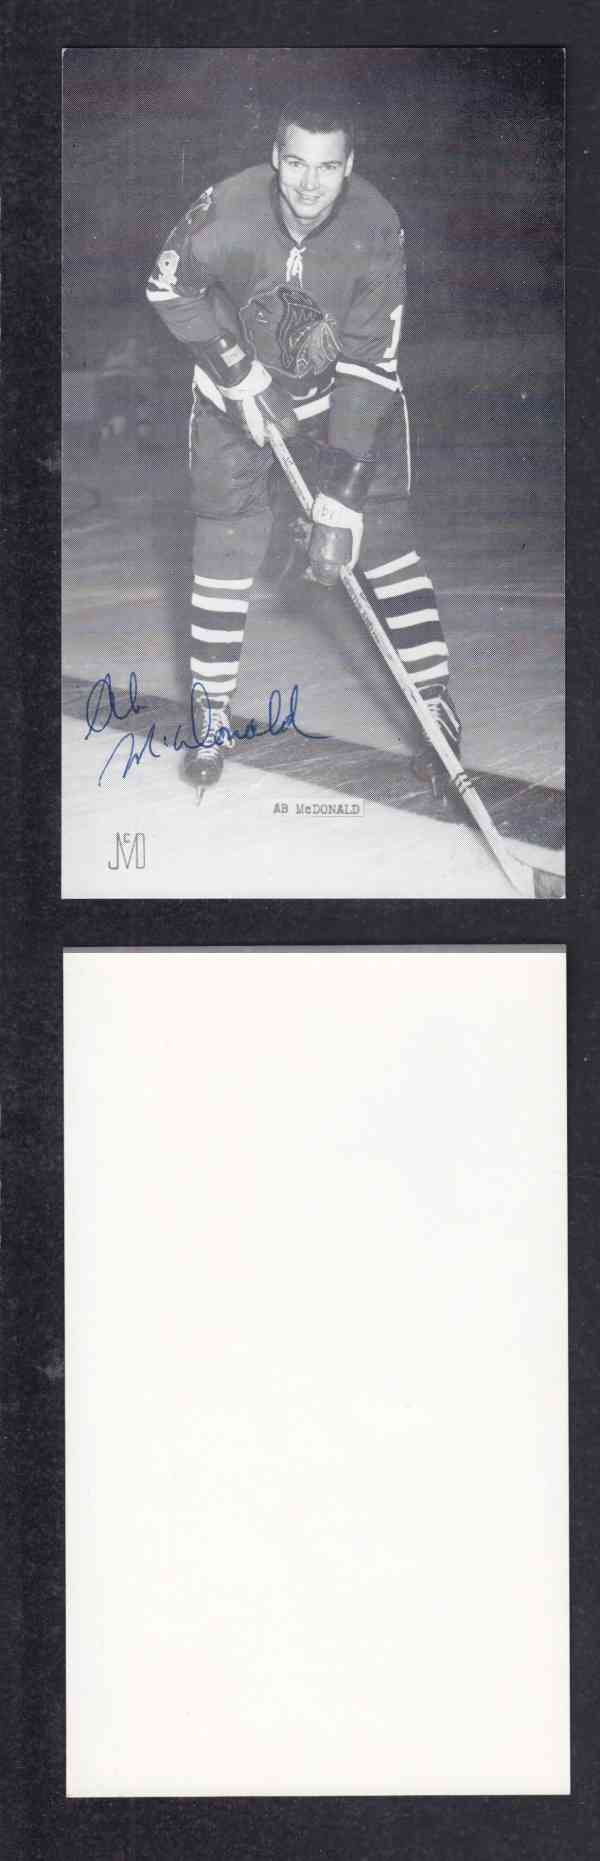 1960 'S CHICAGO BLACKHAWKS A.McDONALD   AUTOGRAPHED POST CARD photo